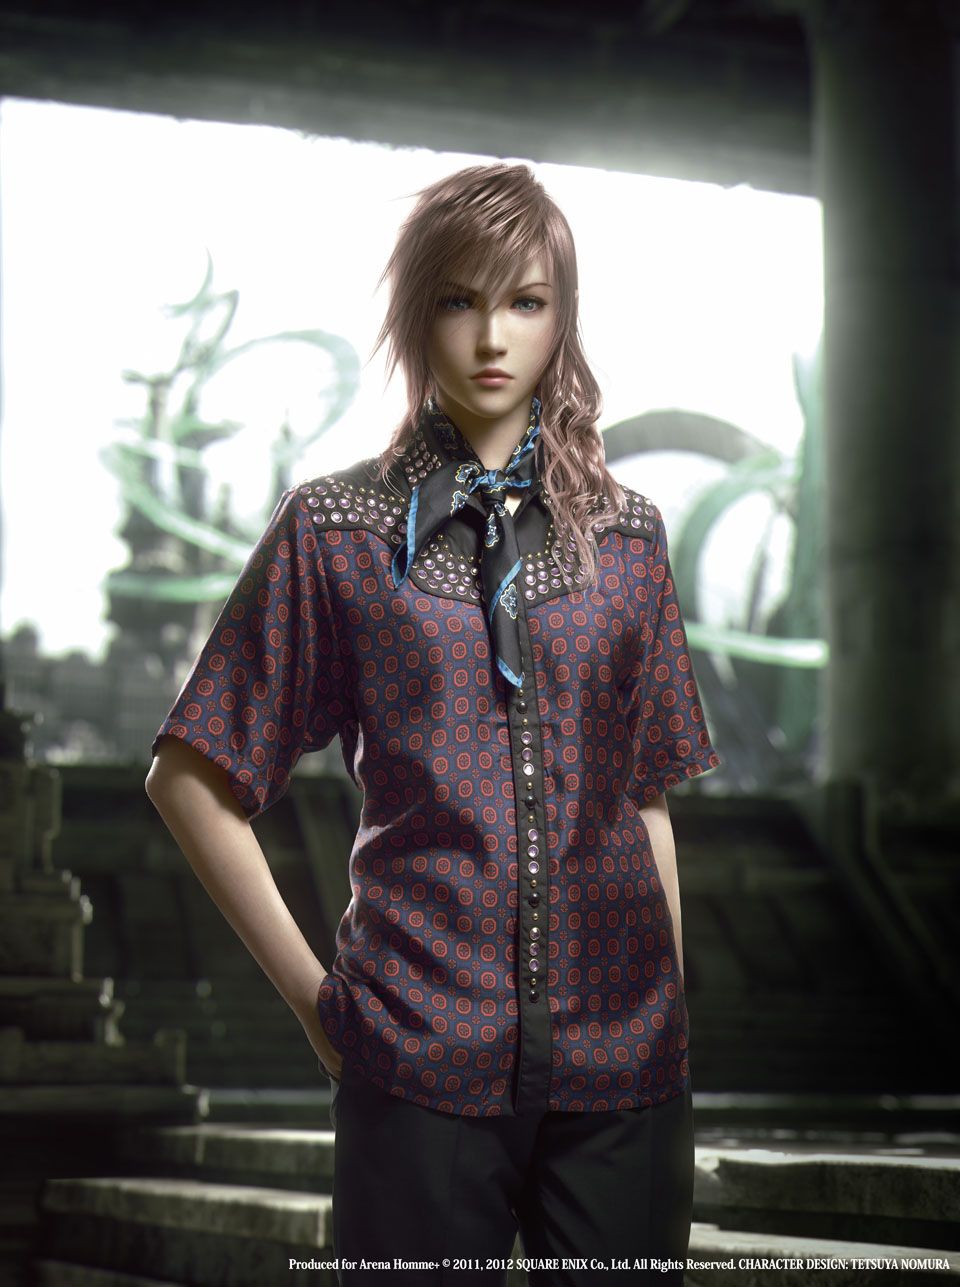 Final Fantasy XIII-2' stars model Prada